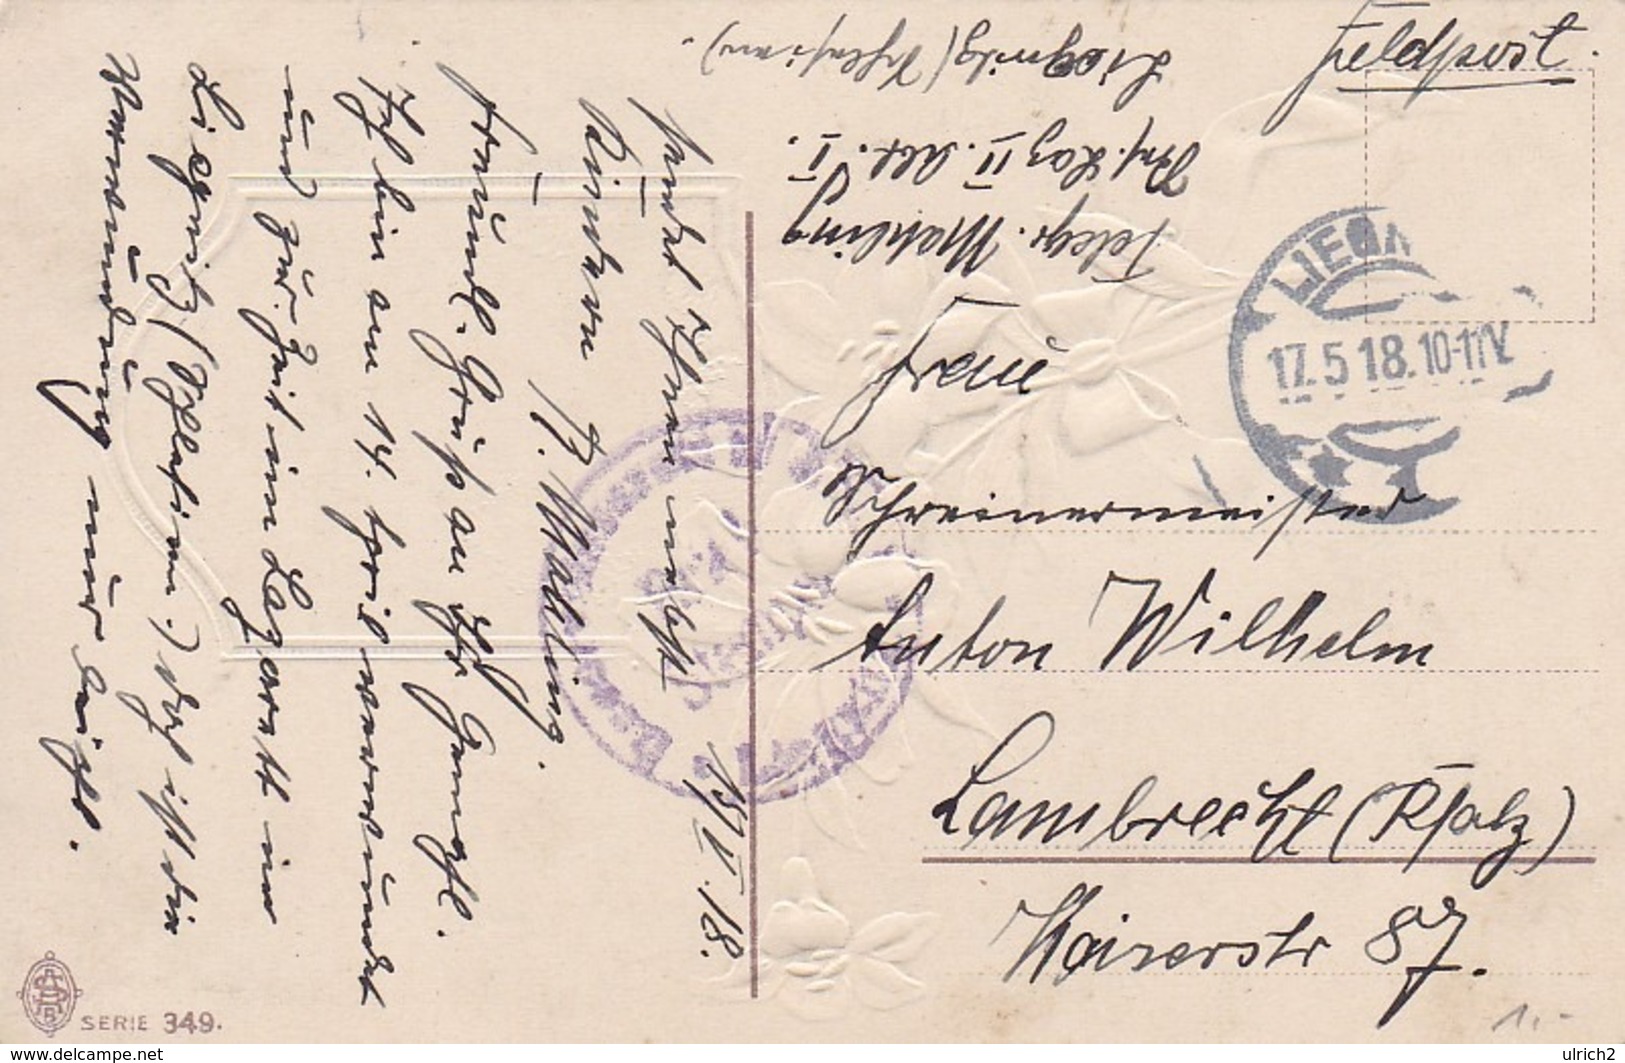 AK Herzlichen Pfingstgruss - Kirche Blumen - Reliefdruck - Feldpost Reserve Lazarett II Liegnitz - 1918 (45017) - Pentecost